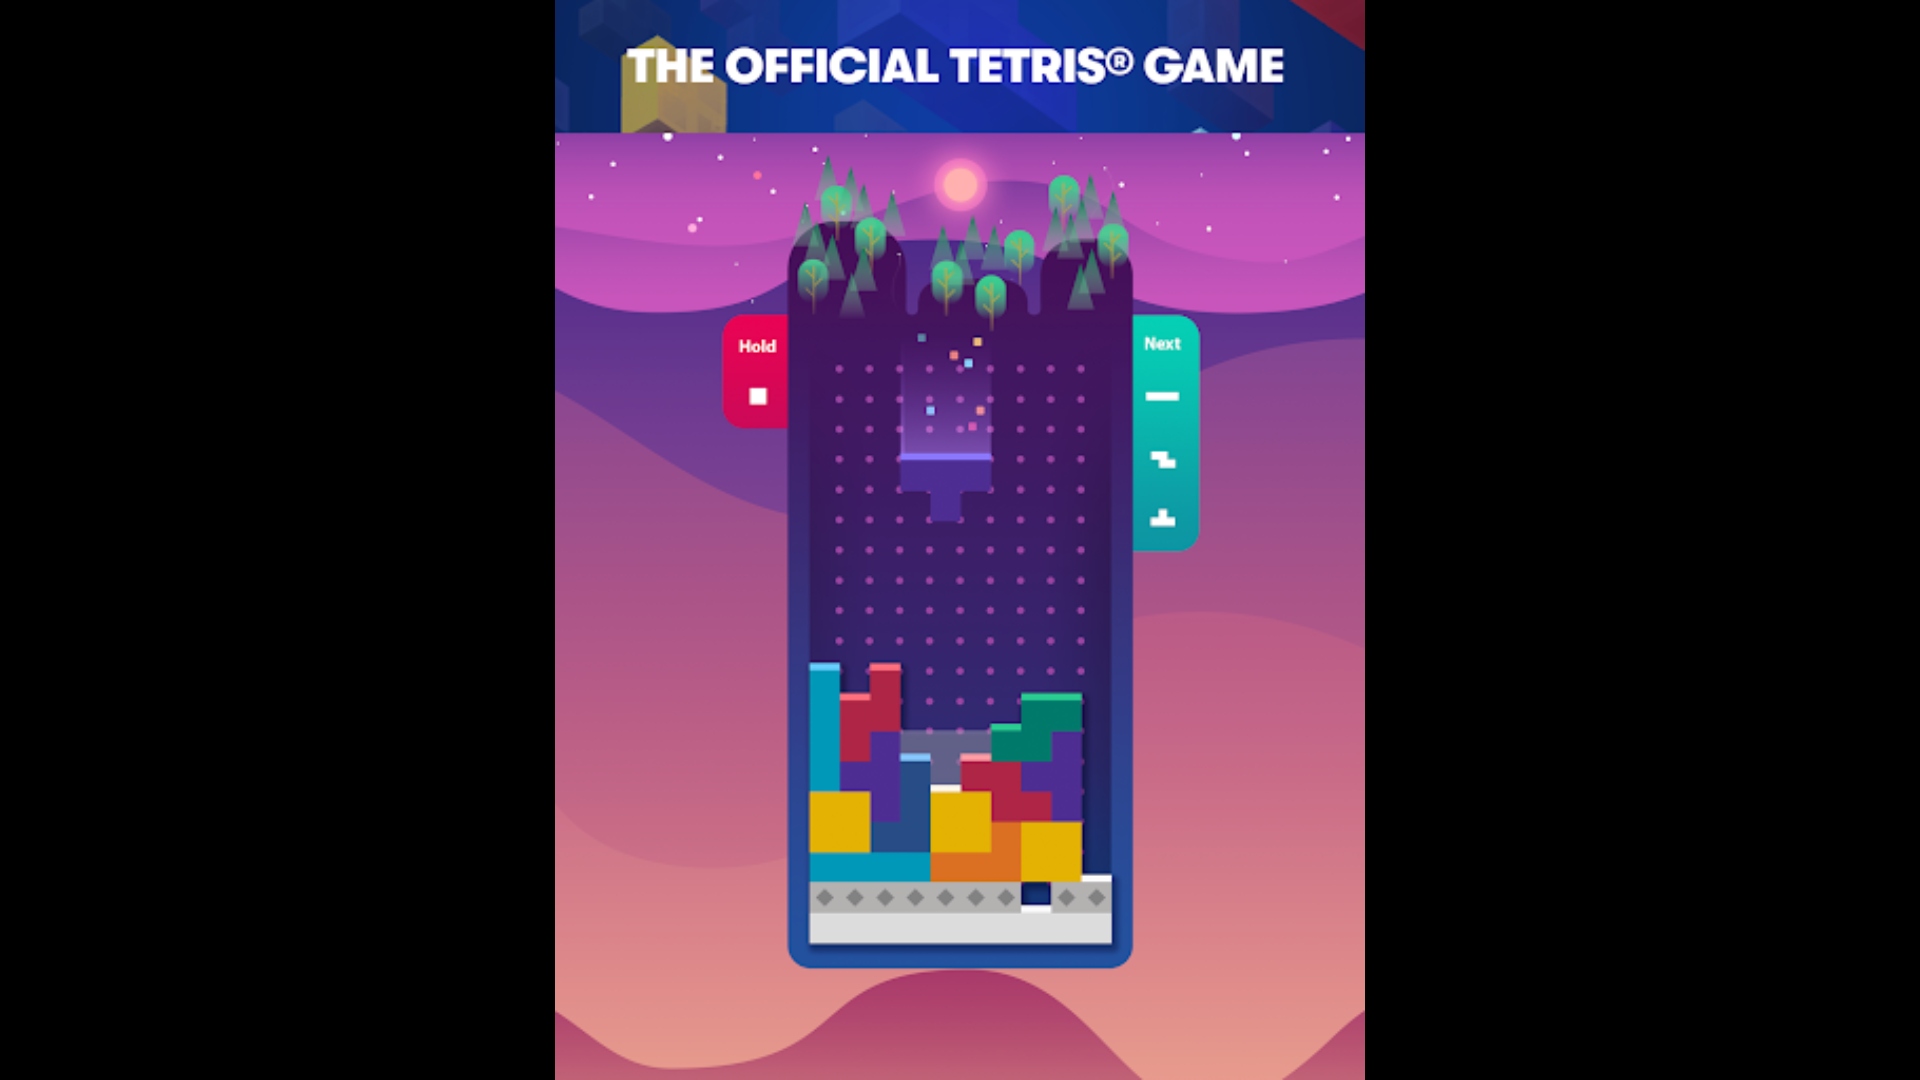 Addictive games - Tetris. A screenshot shows a Tetris game in progress.